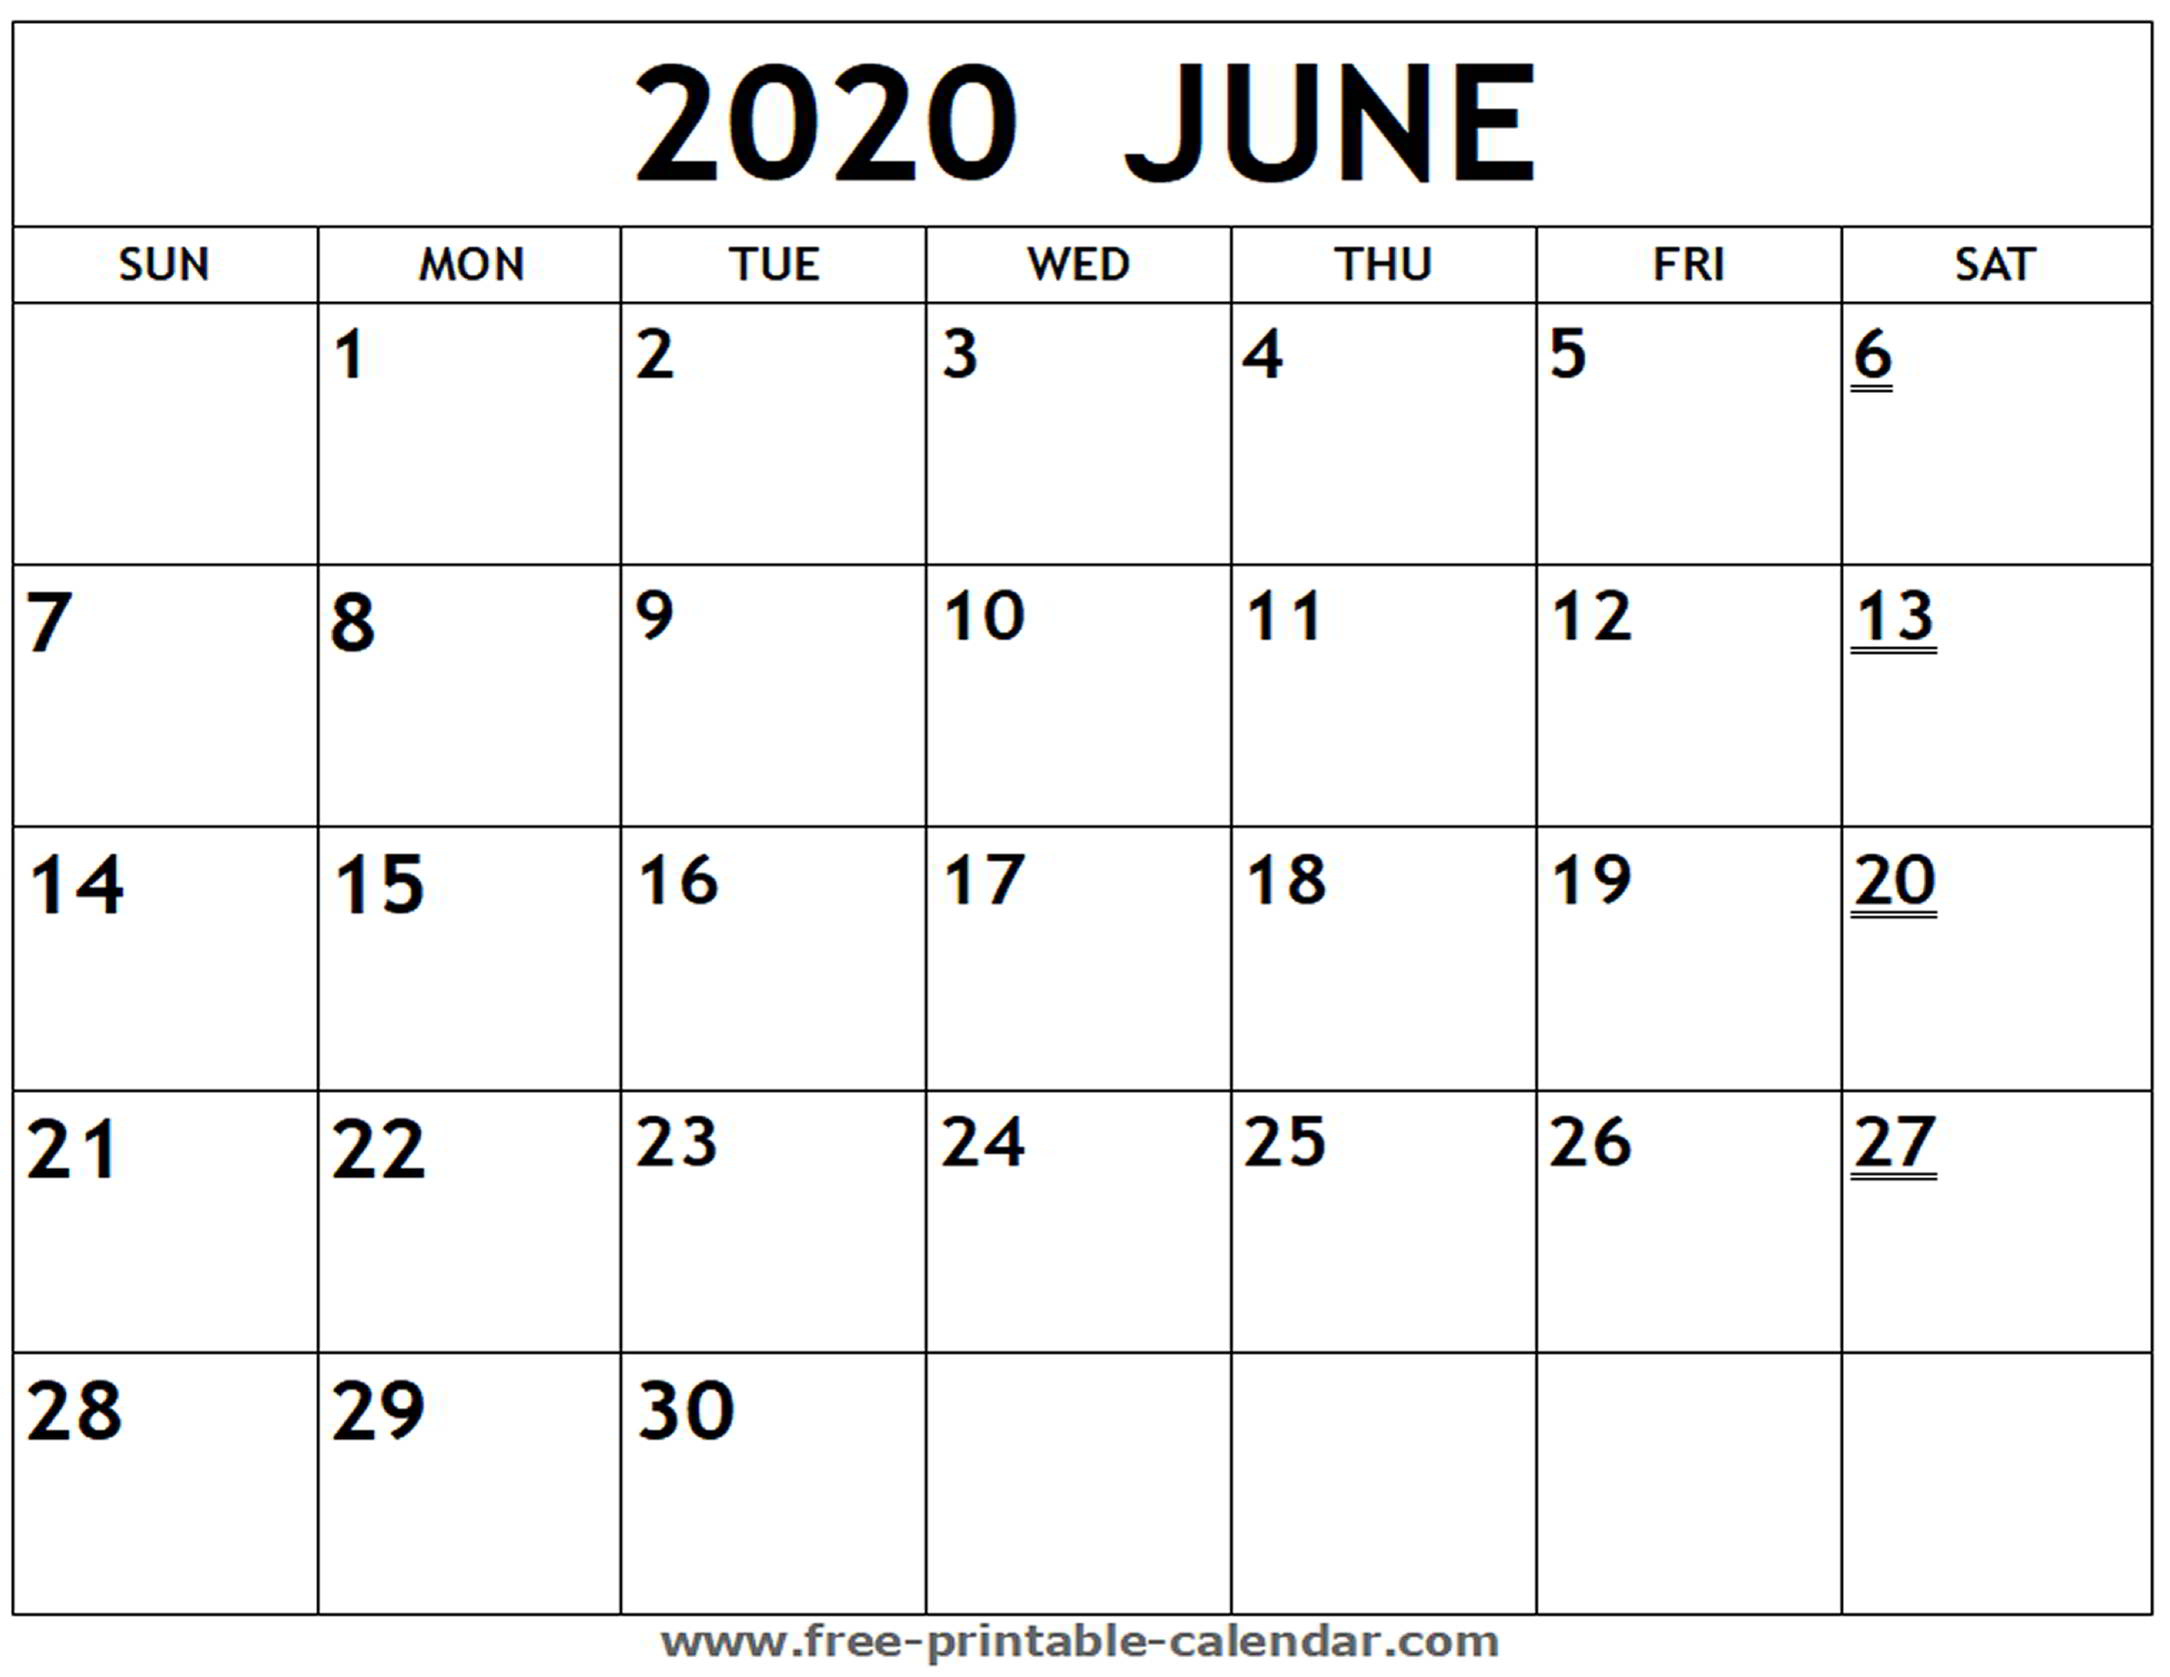 June Calendar Printable 2020 - Wpa.wpart.co